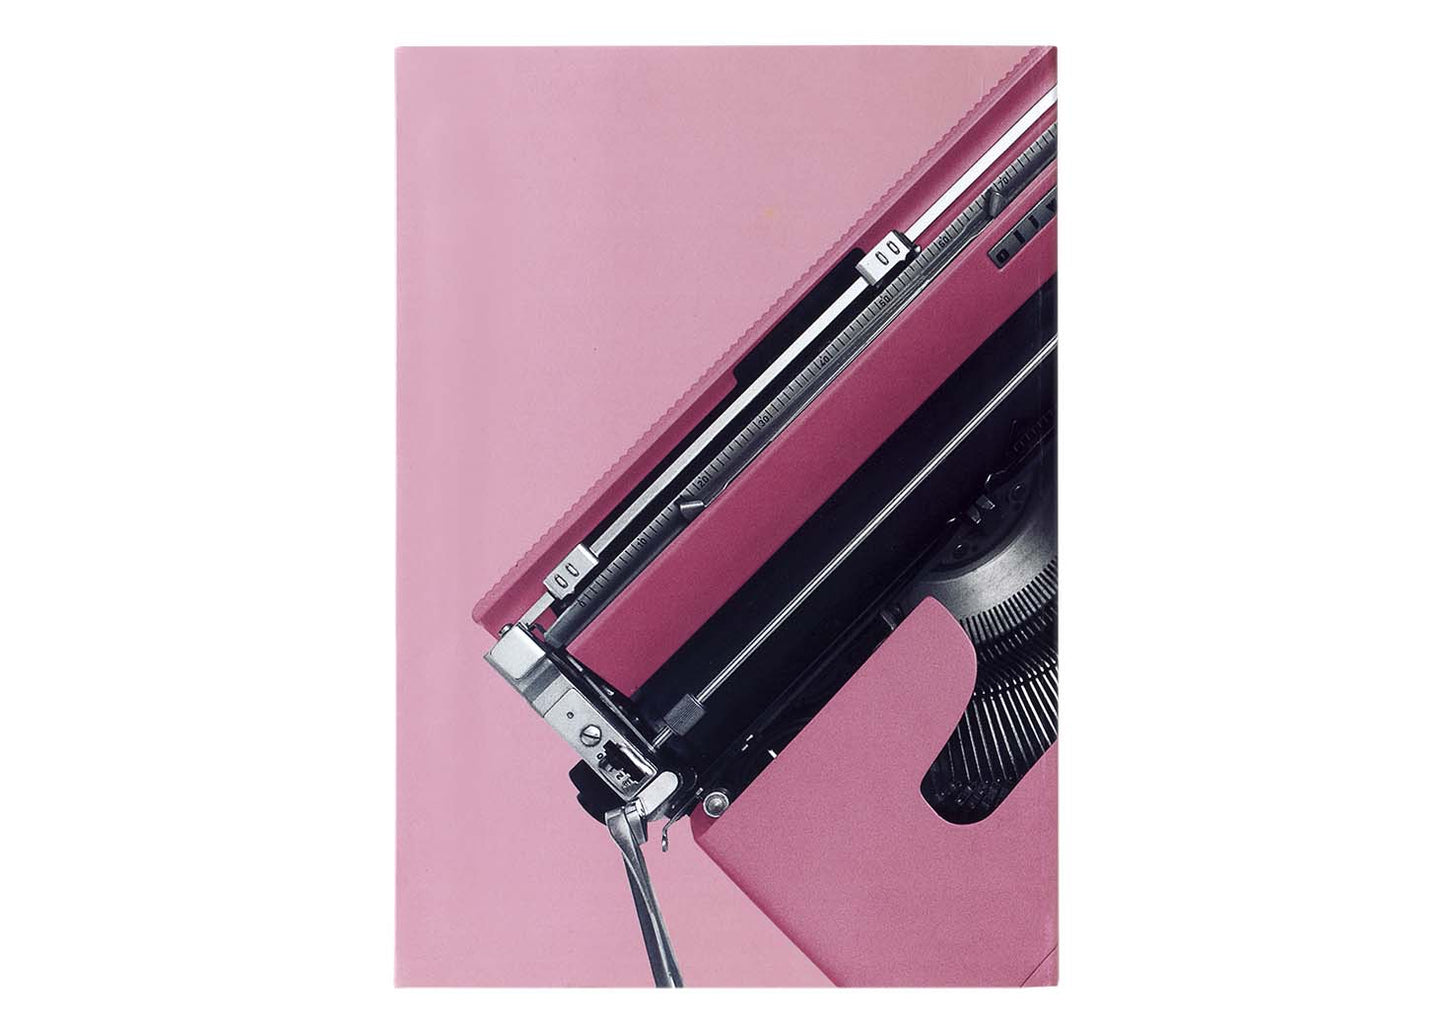 Olivetti Tribute Notebook - Lettera 22 - Soft Cover